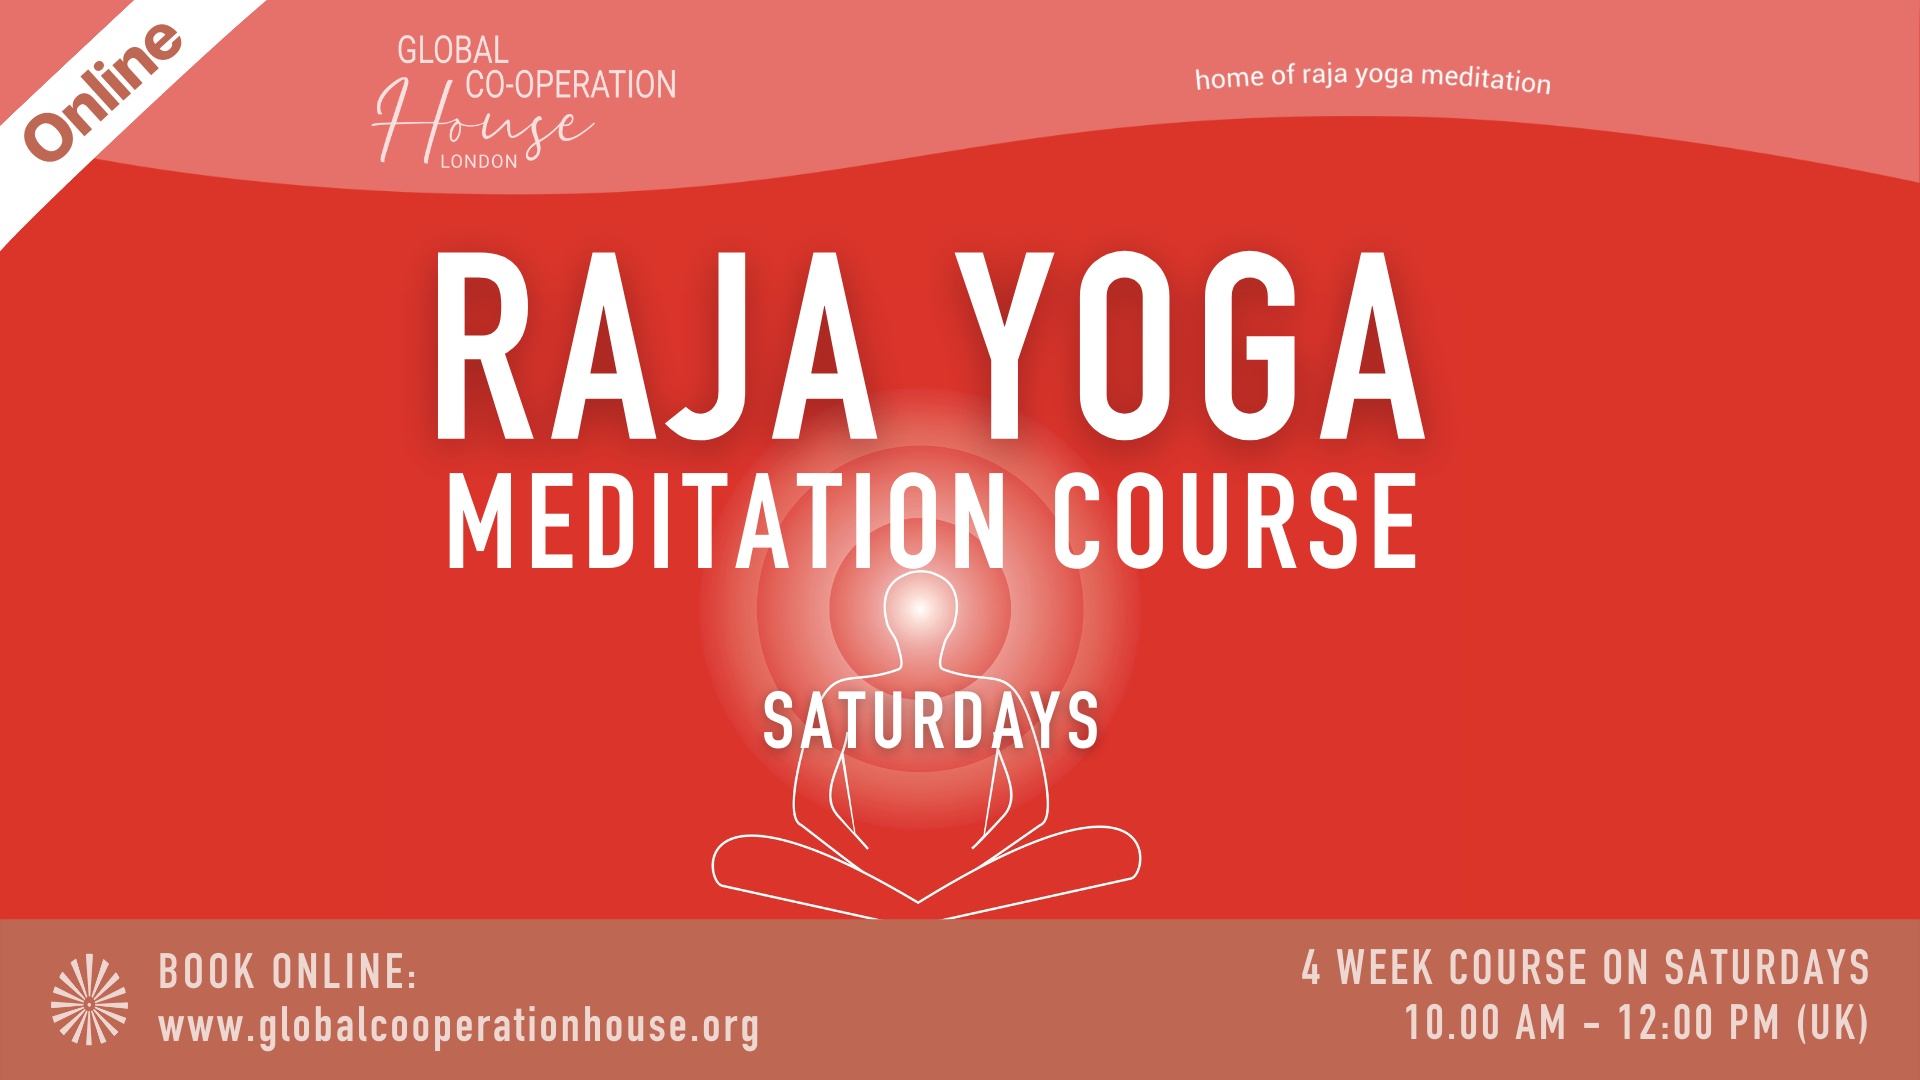 Raja Yoga Meditation Course - Saturday Mornings